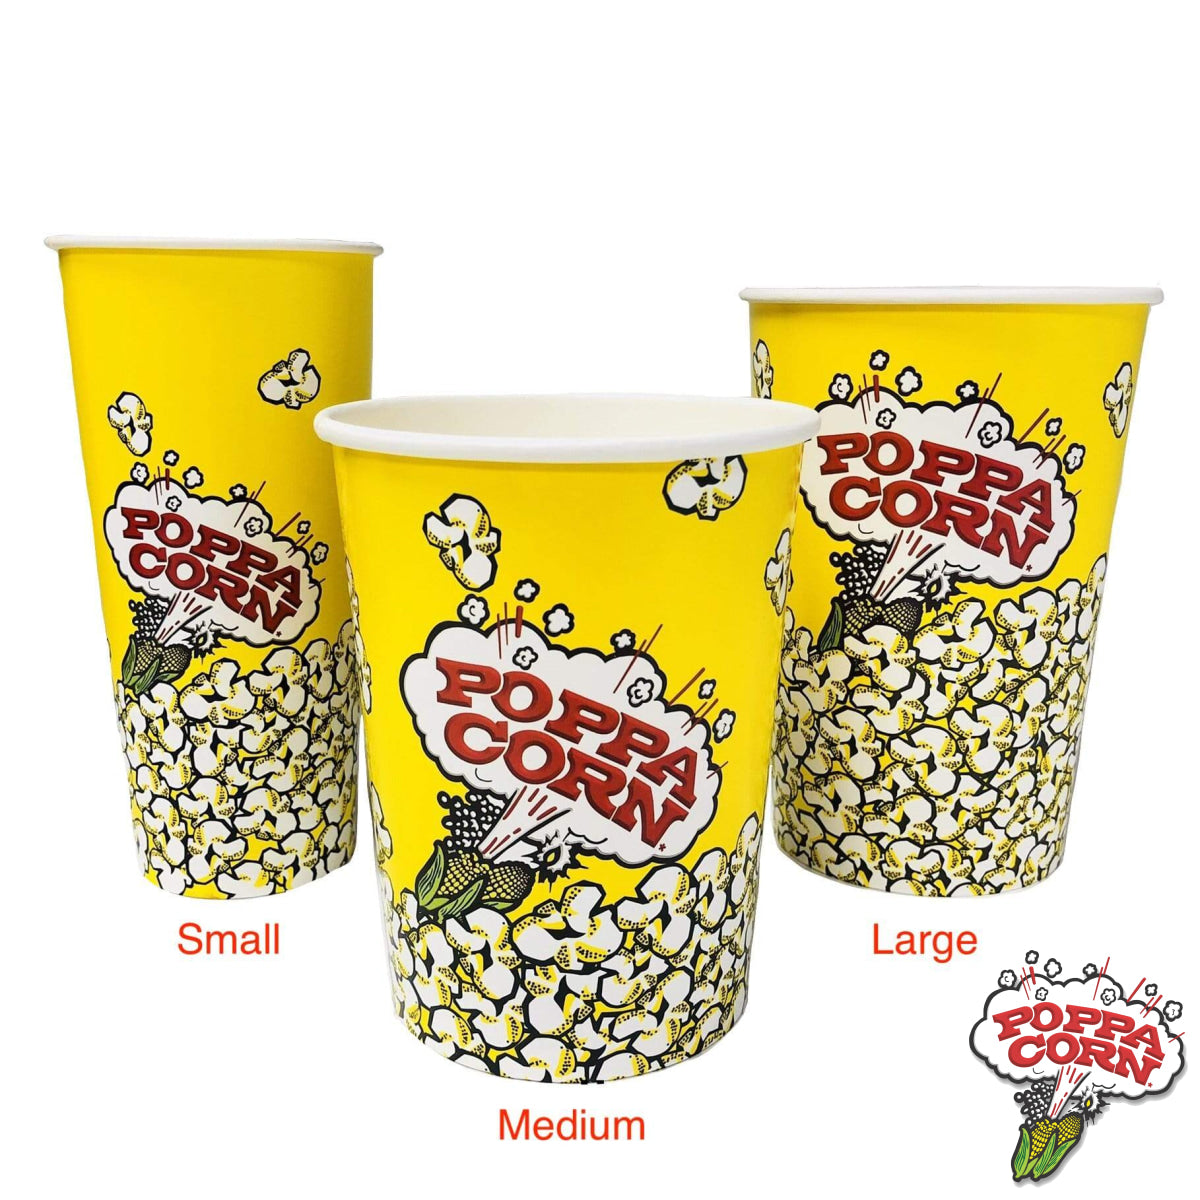 CUP085 - Rolled Rim Popcorn Cups - X Large 85 oz - 150/Case - Poppa Corn Corp